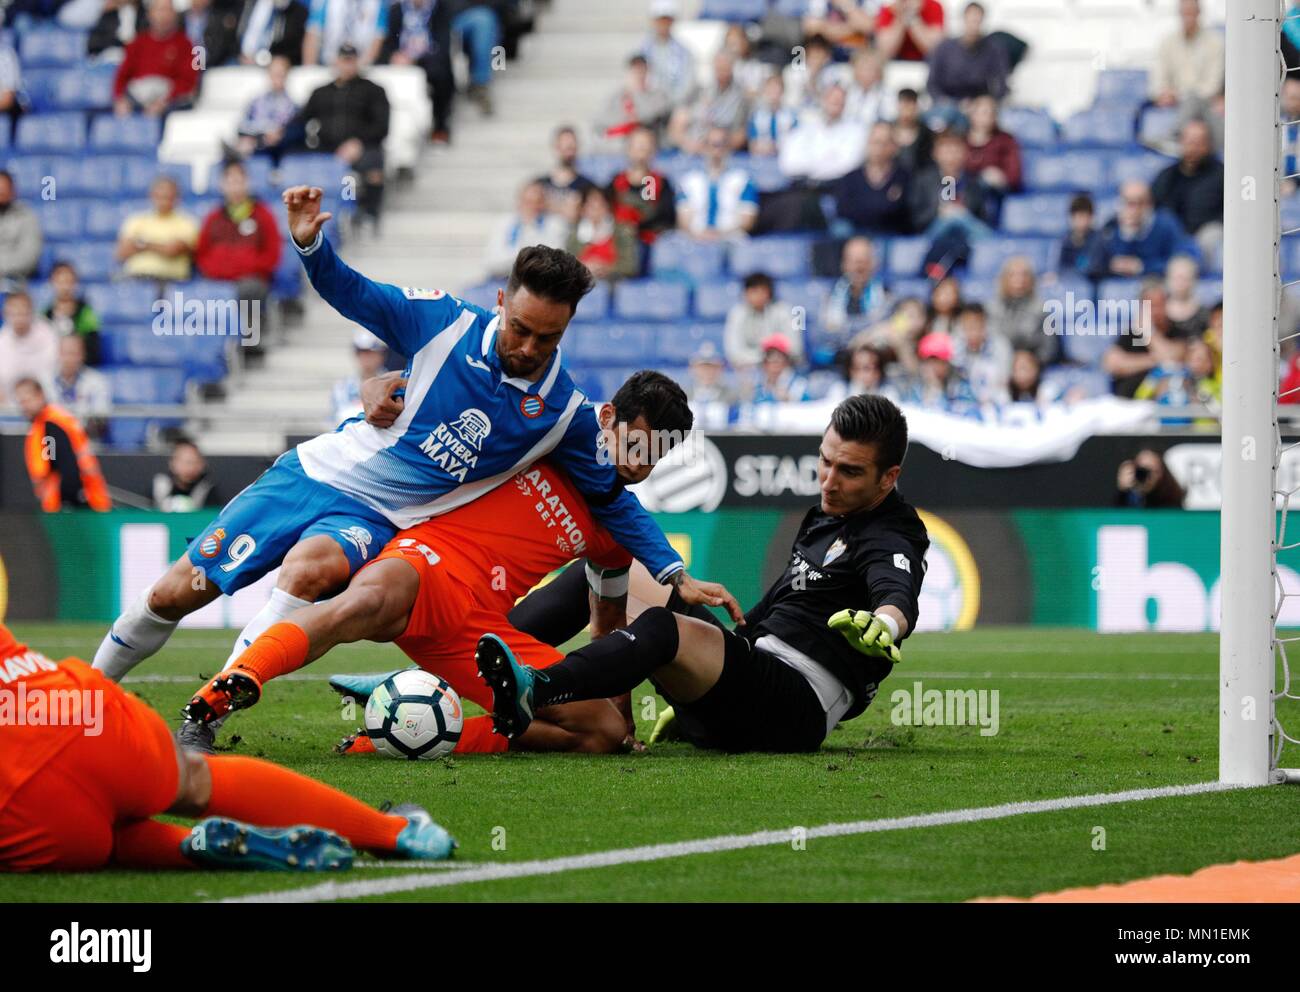 Barcelona, Spain. 13th May, 2018. RCD Espanyol's Sergio Garcia (L) scores during a Spanish league match between RCD Espanyol and Malaga in Barcelona, Spain, on May 13, 2018. RCD Espanyol won 4-1. Credit: Joan Gosa/Xinhua/Alamy Live News Stock Photo